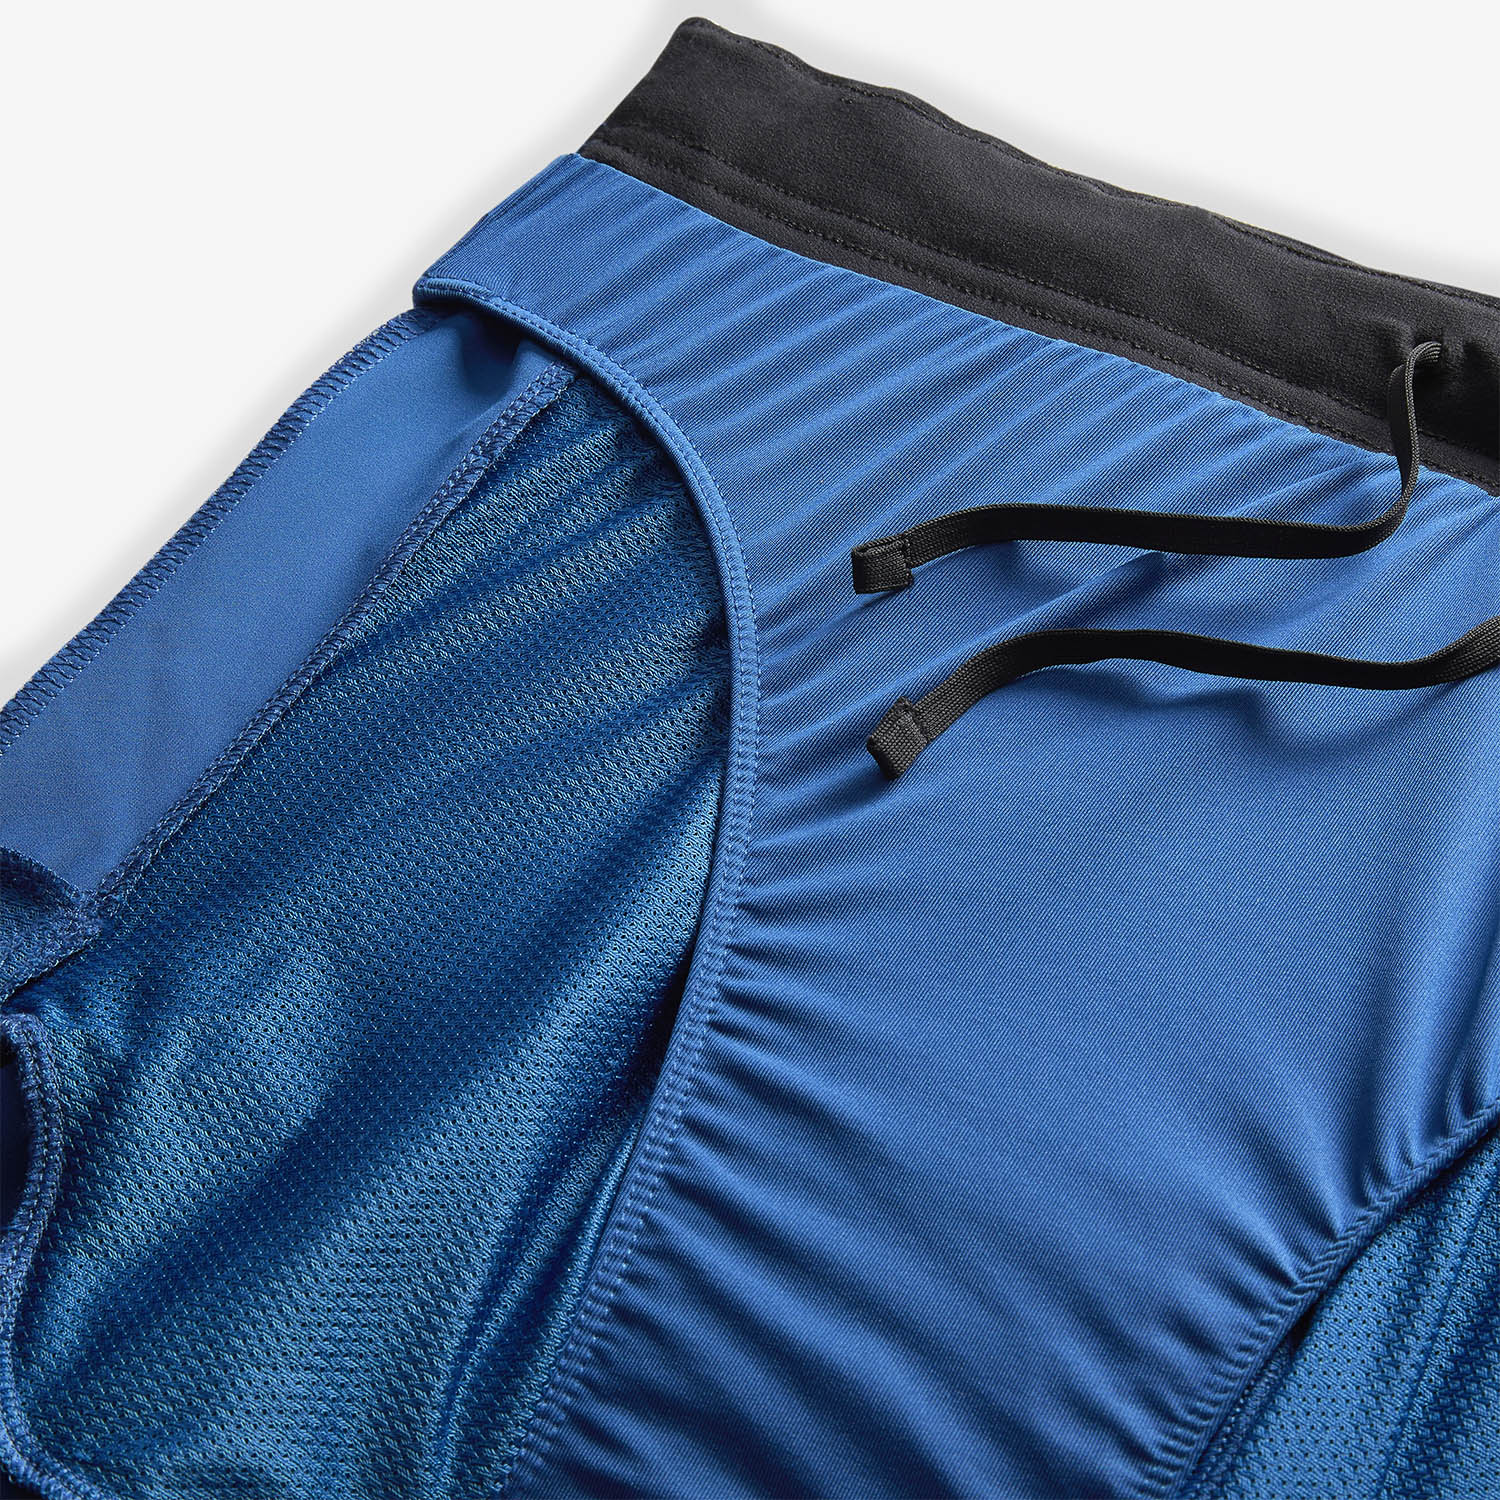 Nike Dri-FIT Challenger Flash 5in Pantaloncini - Court Blue/Black/Reflective Silver